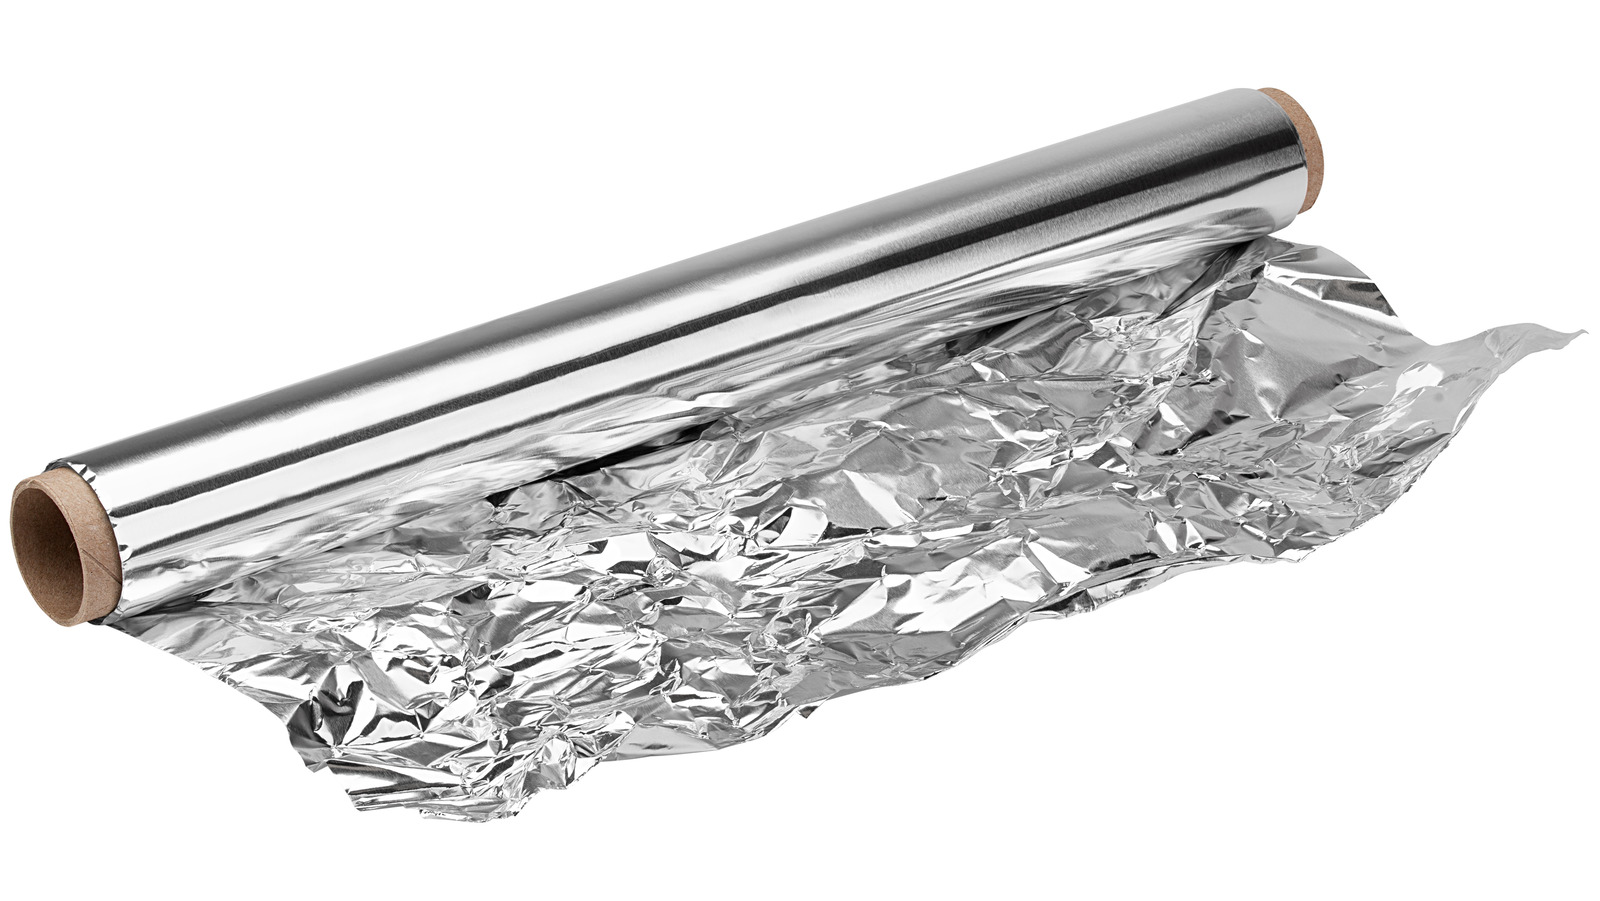 Can You Reuse Aluminum Foil?